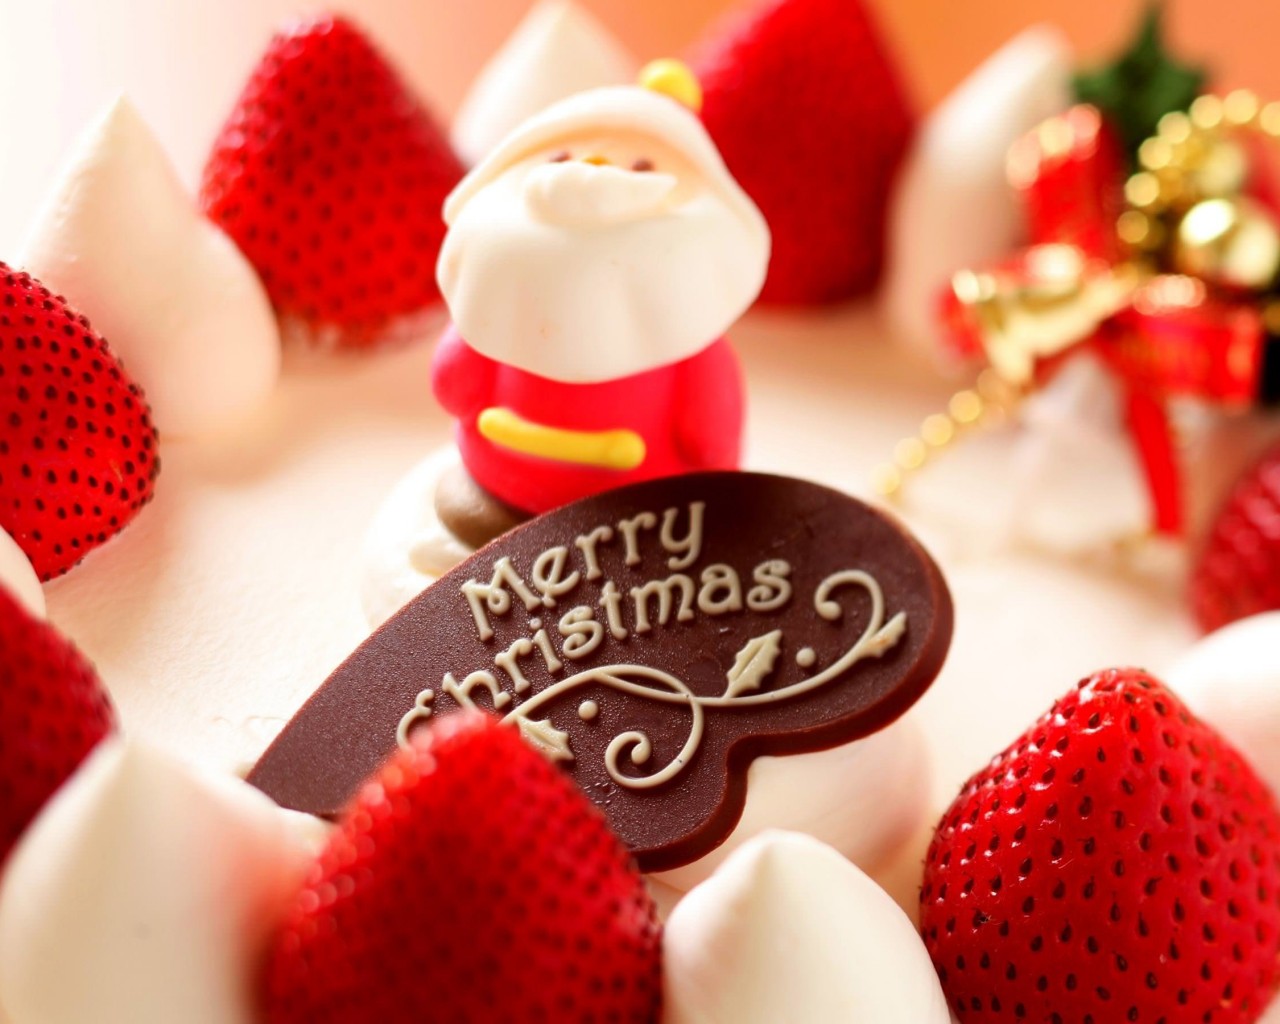 Merry Christmas Strawberry Dessert Wallpaper for Desktop 1280x1024